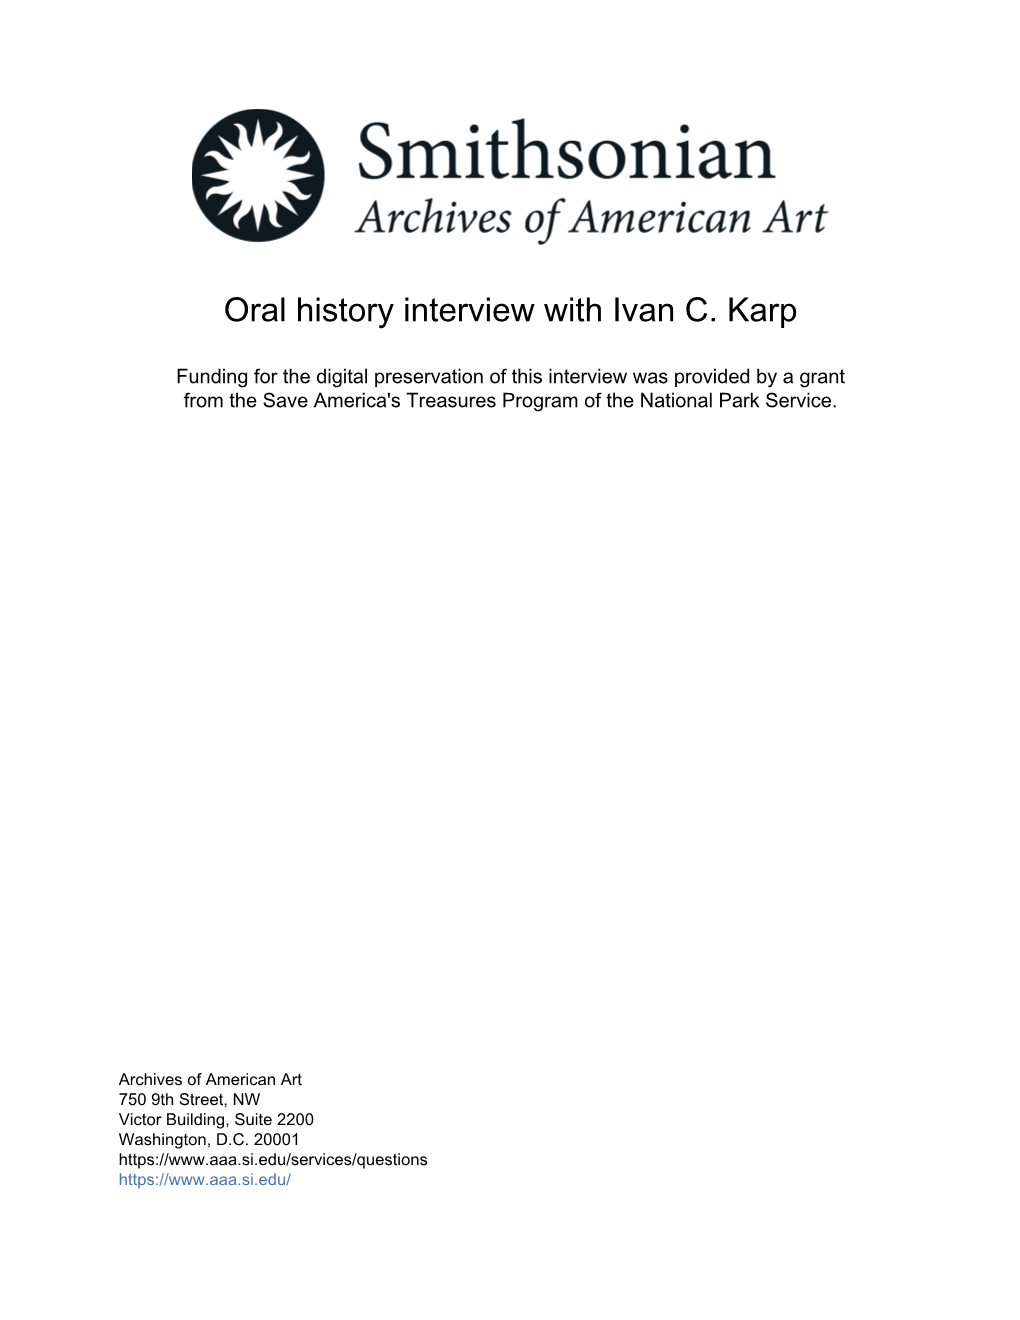 Oral History Interview with Ivan C. Karp